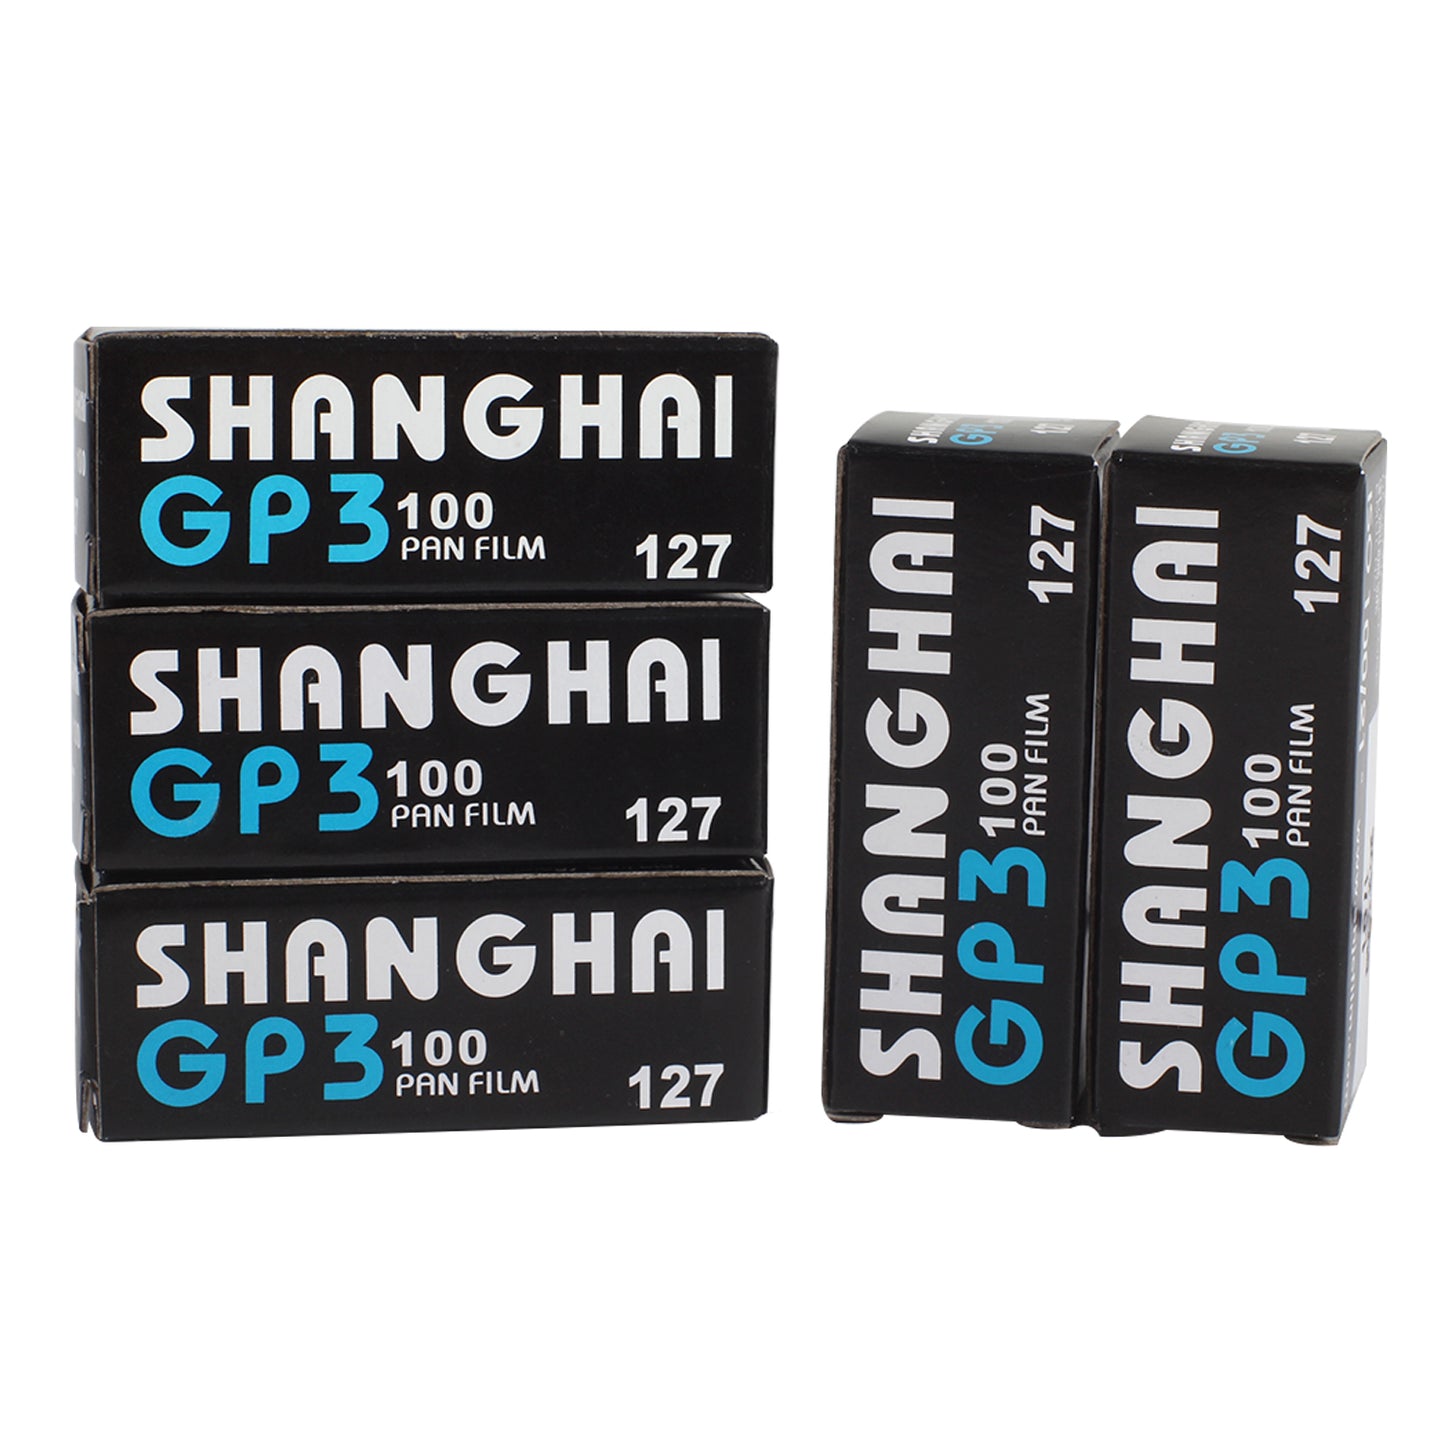 5x Shanghai GP3 127 ISO 100 Bianco e nero B&amp;N B/N Film Auto DX Freshest Day For Baby Rollei VEST POCKET 4x4 Bilora Bellea 44